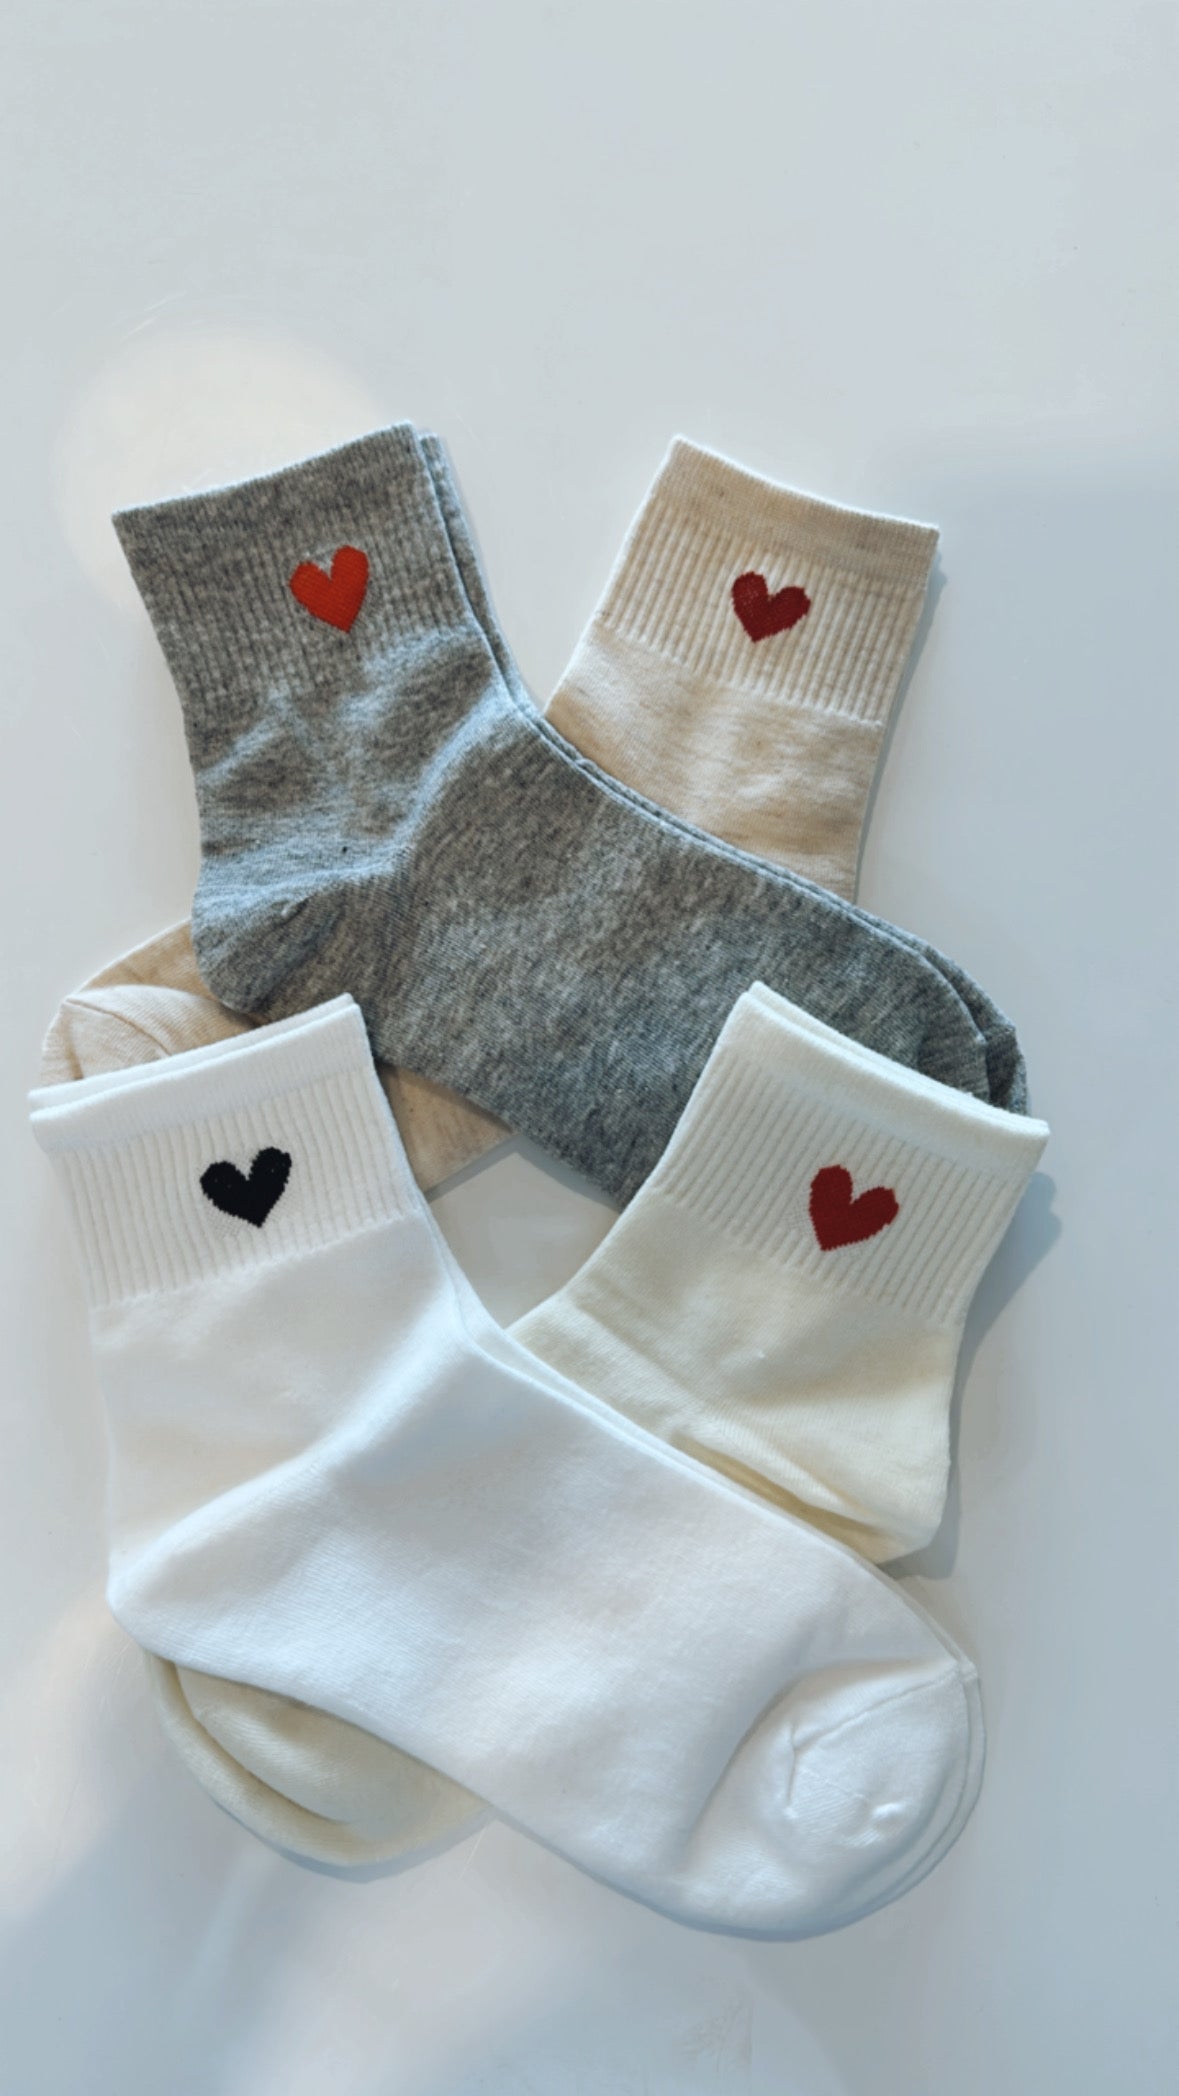 Heart socks